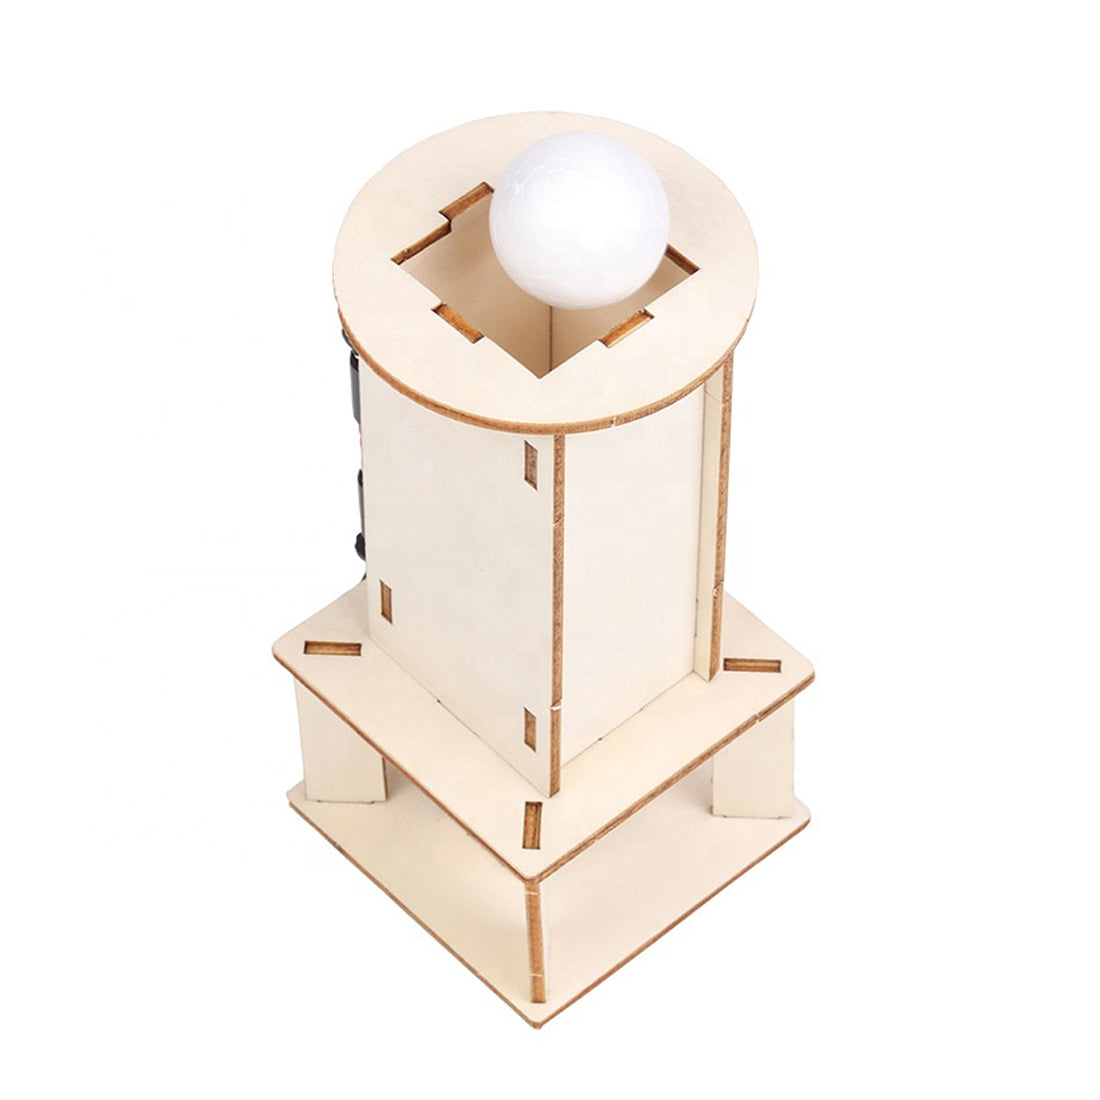 diy-stem-science-experiment-suspension-ball-diy-wooden-education-toy.jpg